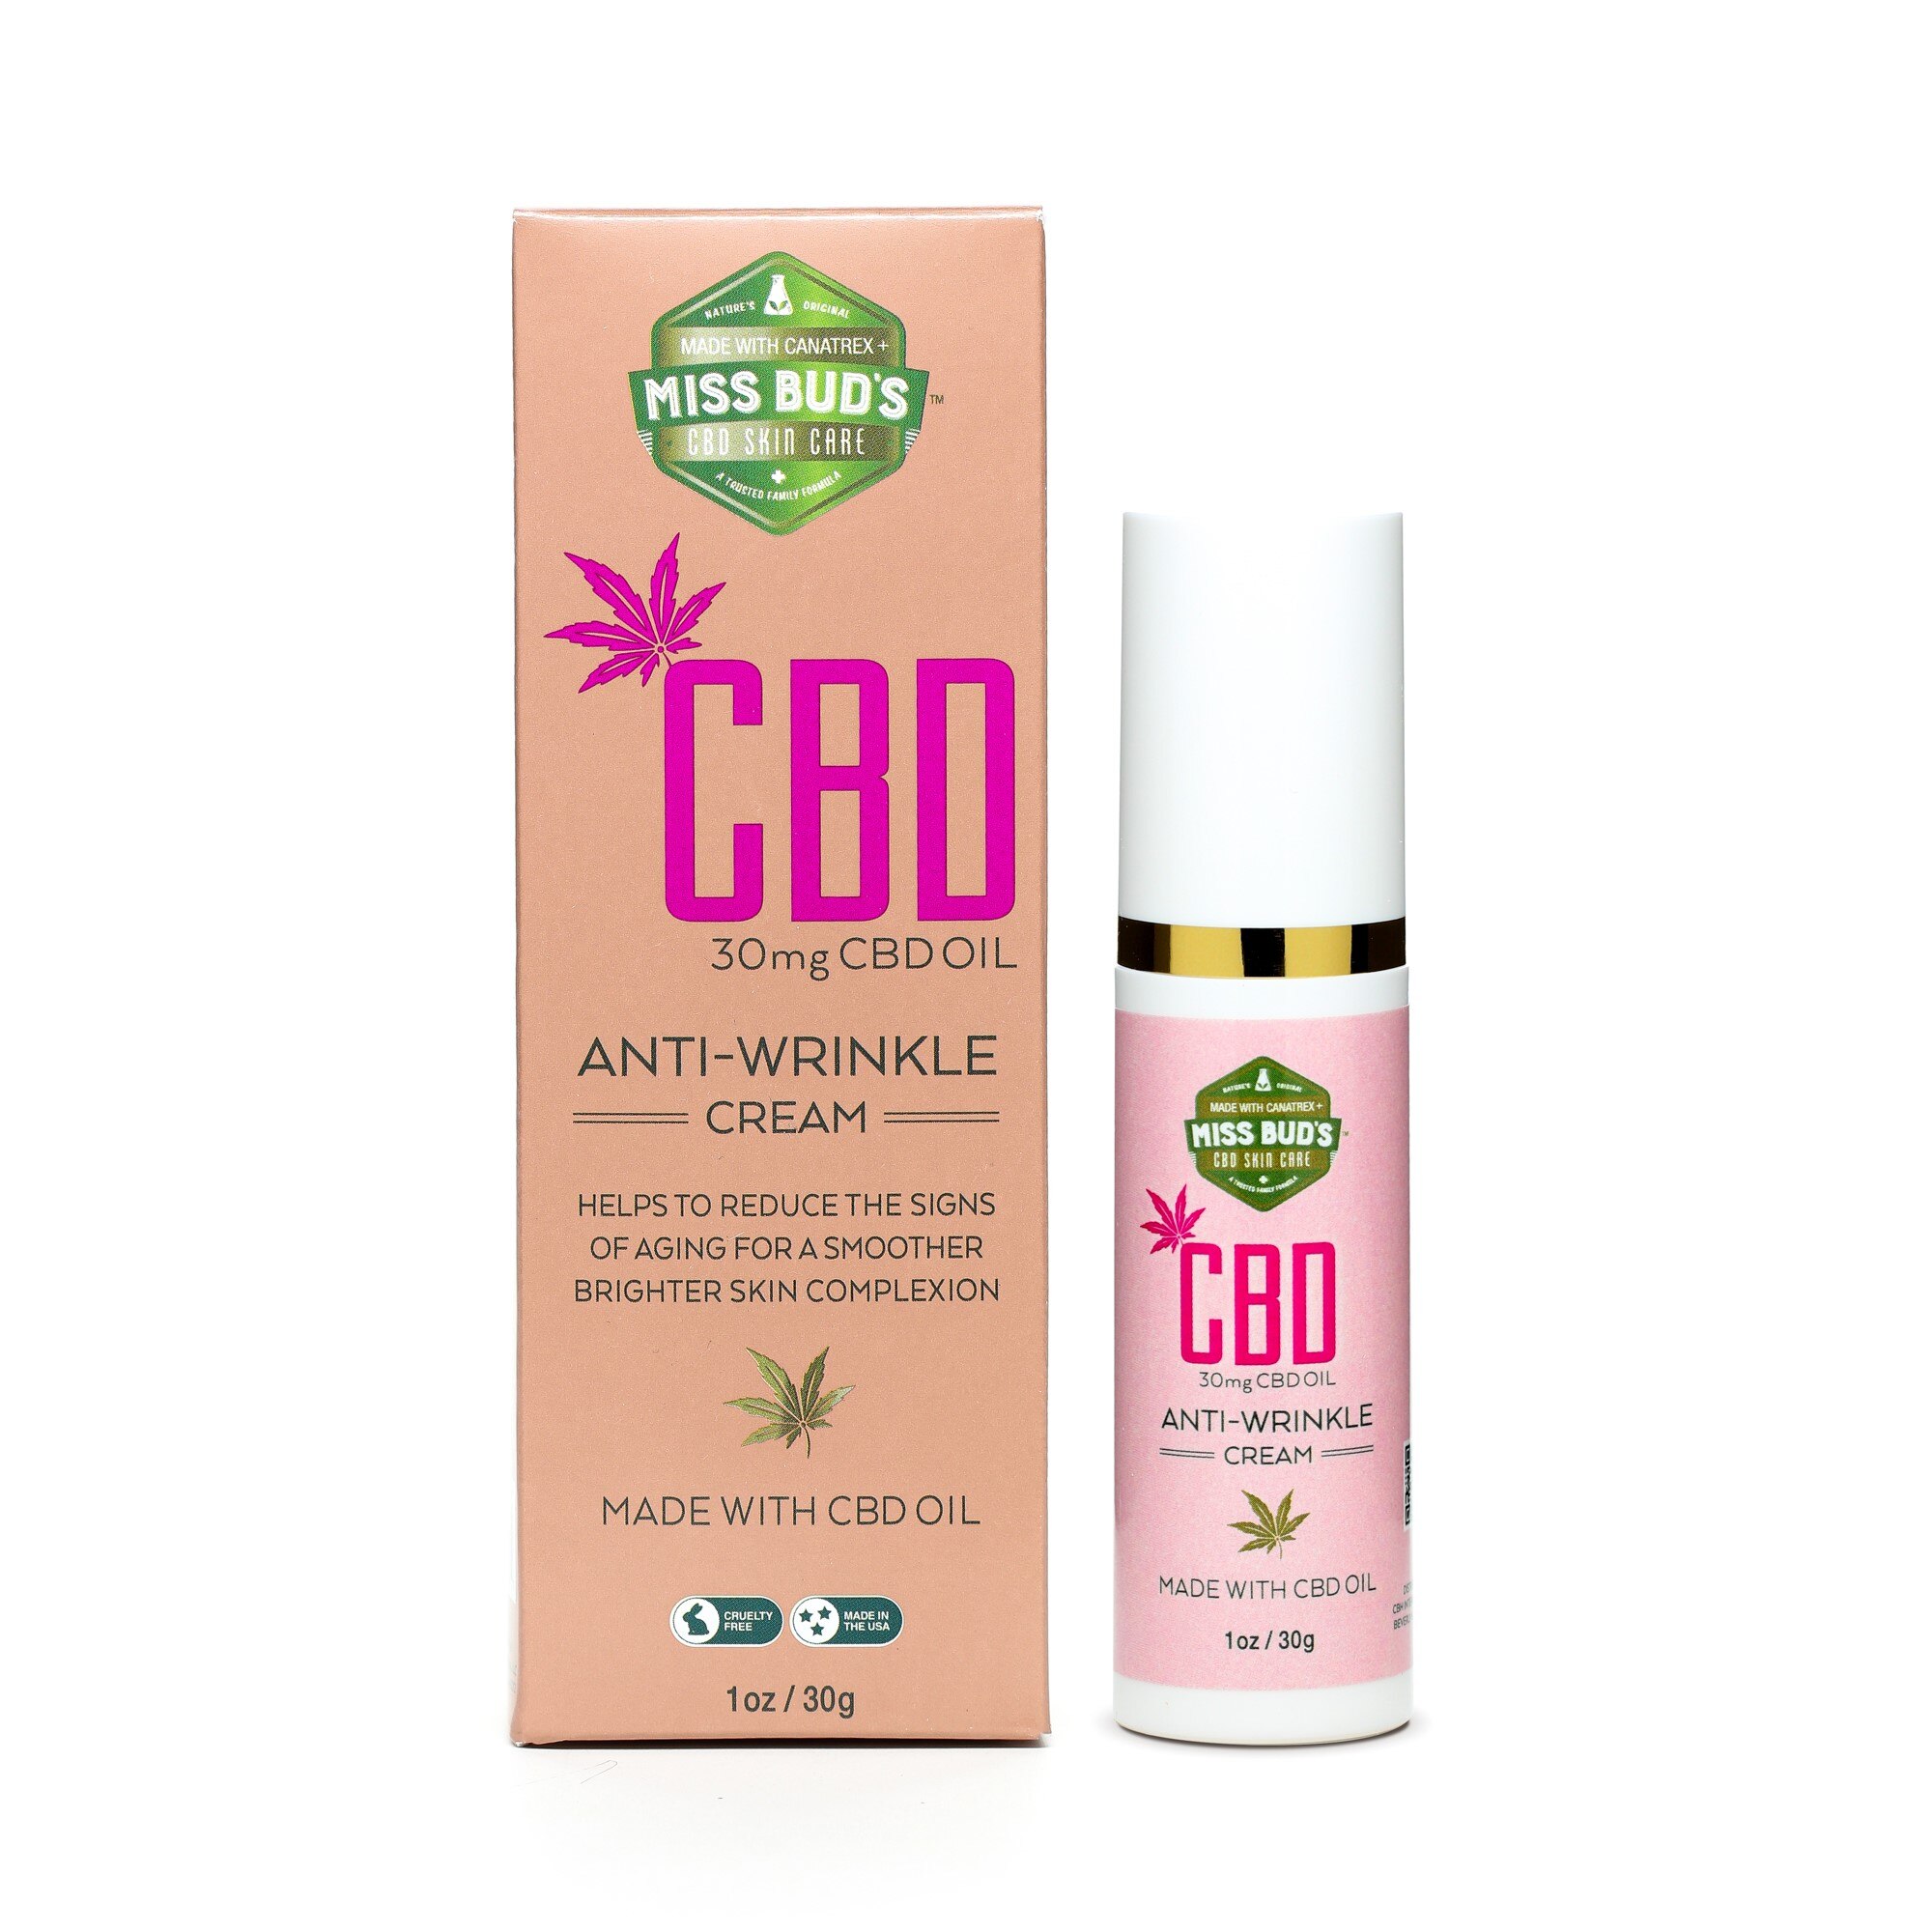 Miss Bud's CBD Anti-Wrinkle Cream, 1 OZ - State Restrictions Apply